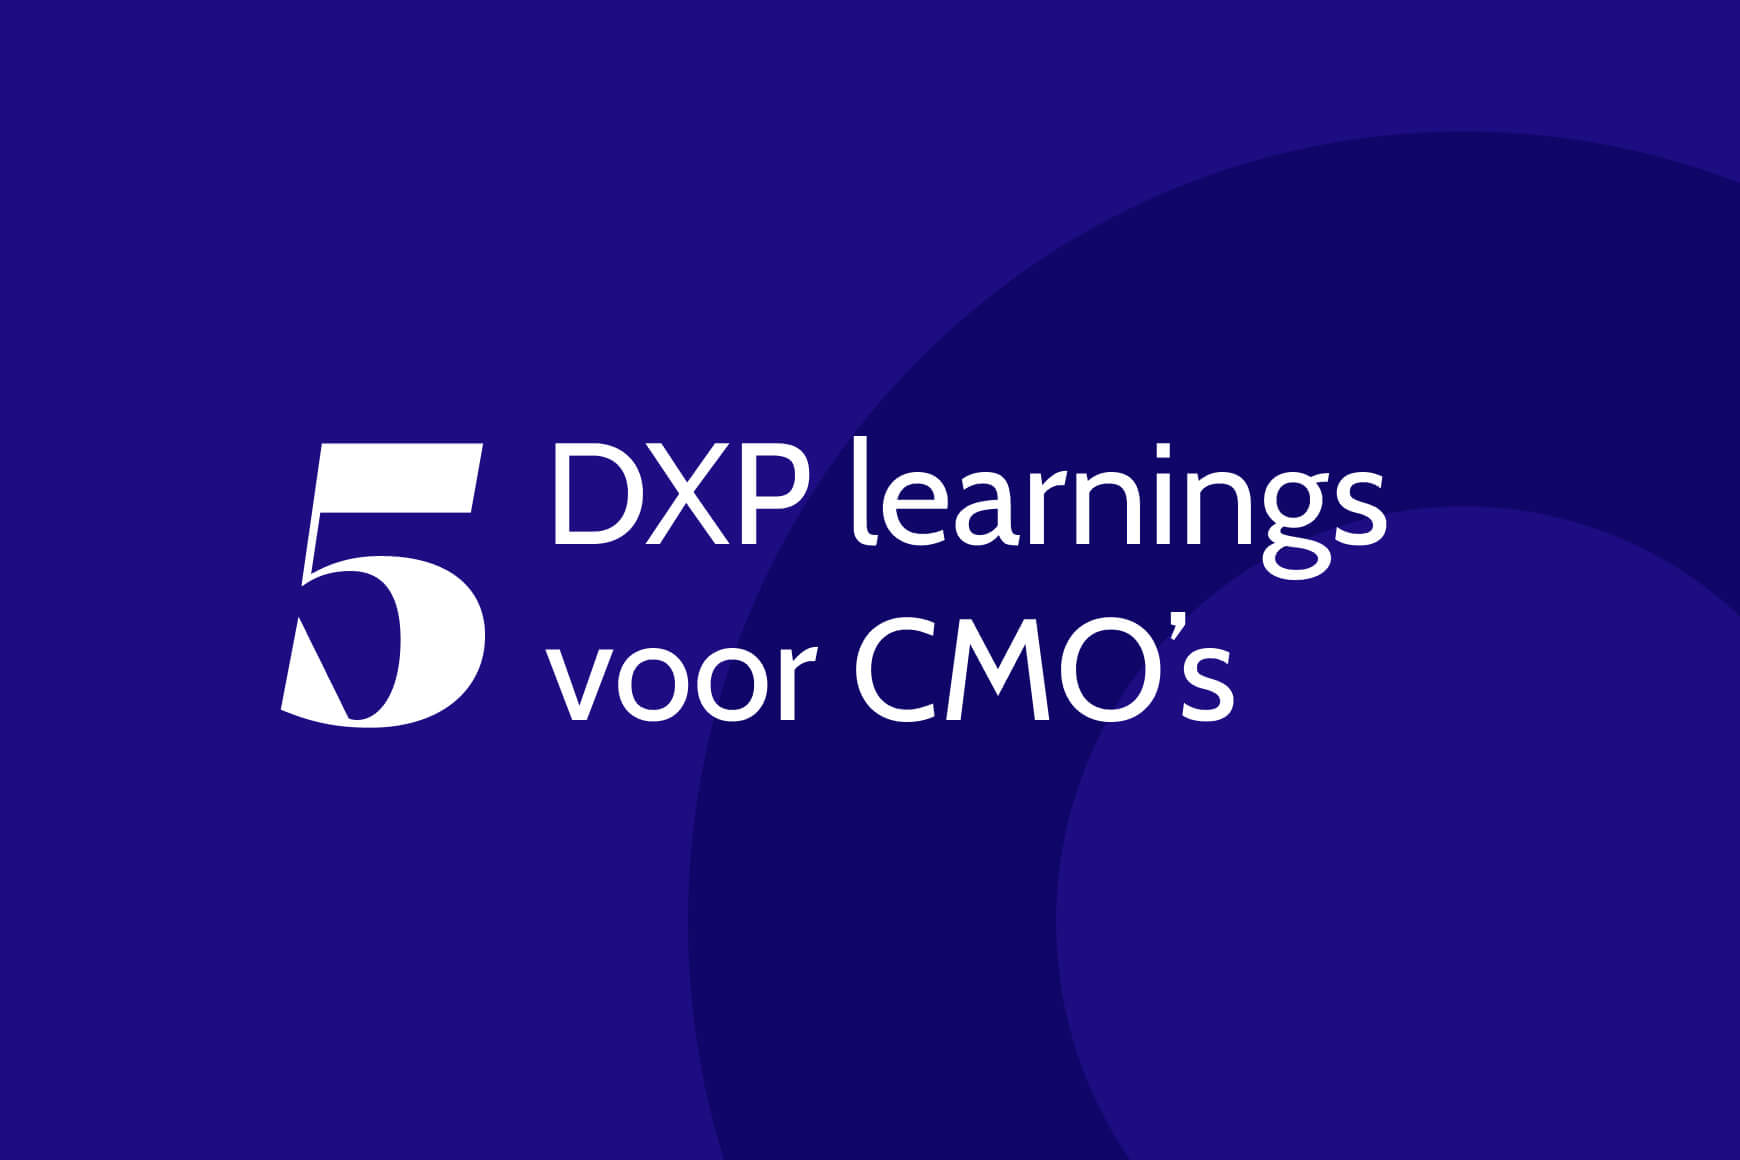 DXP gids voor CMO's